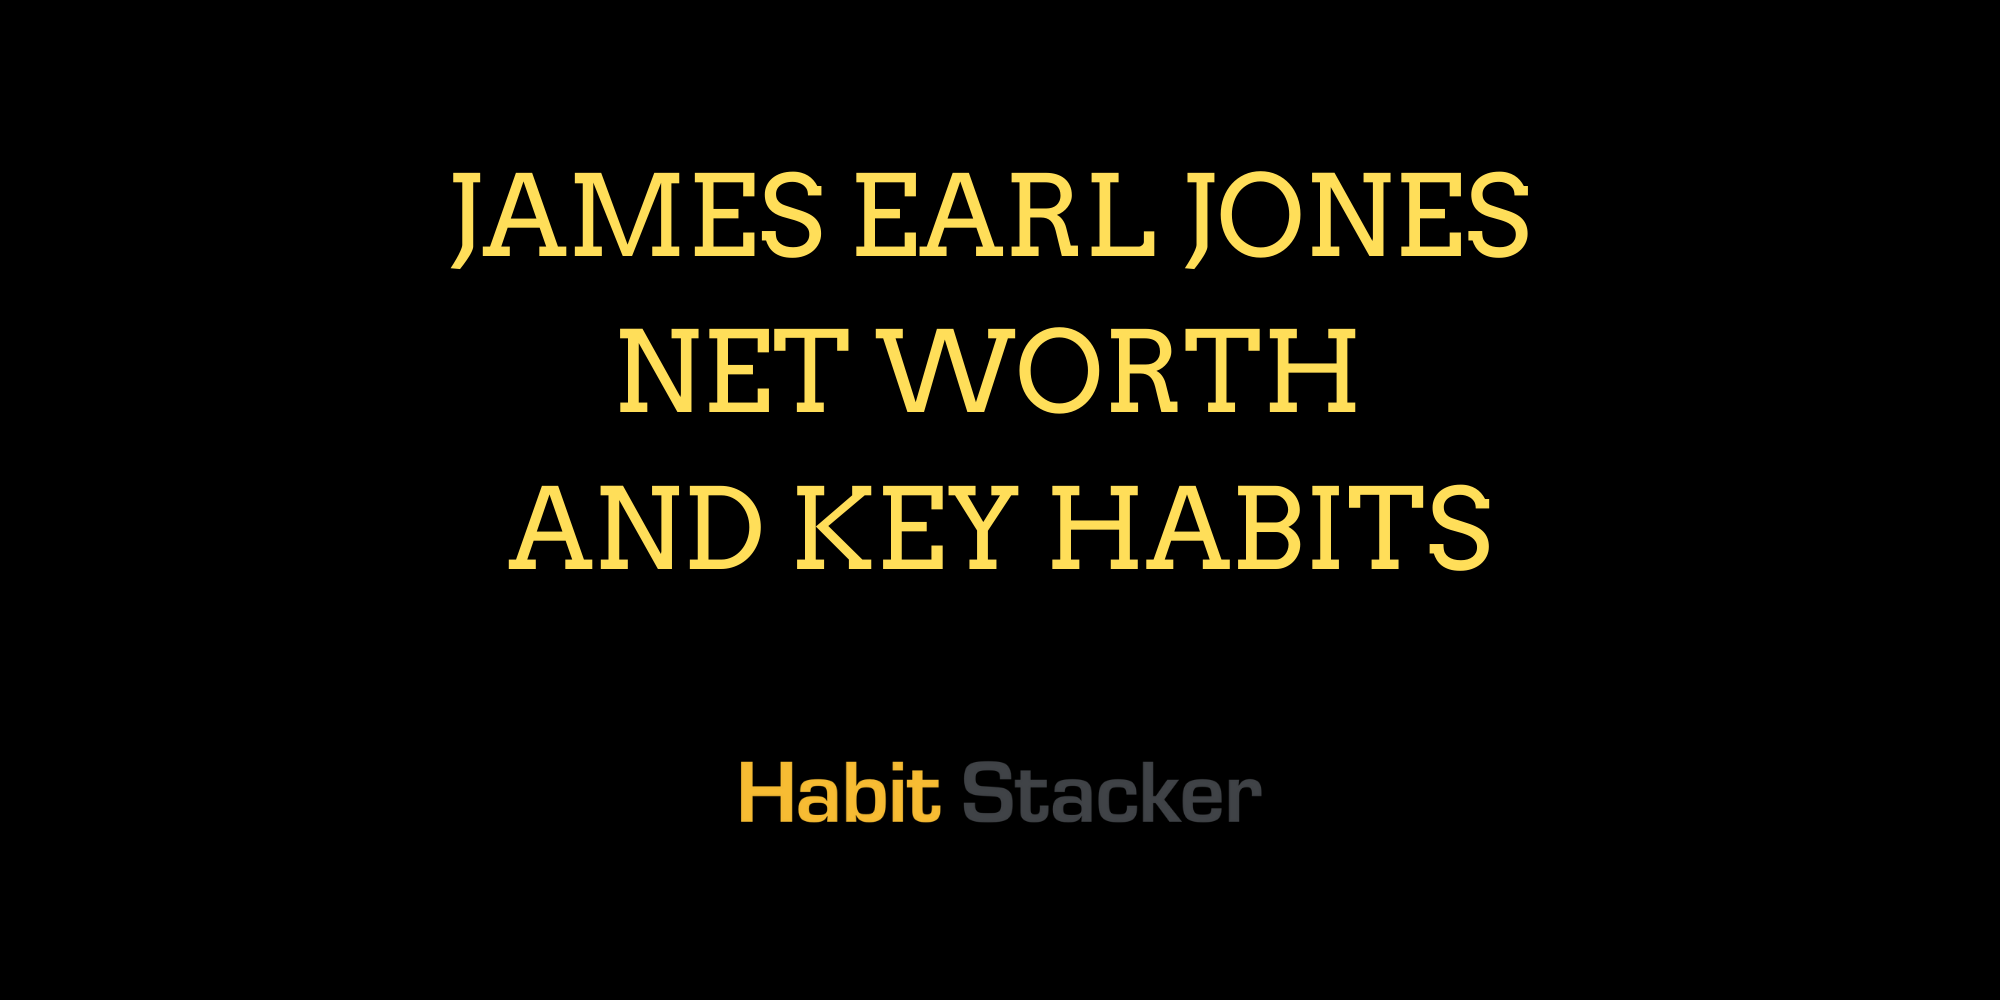 James Earl Jones Net Worth and Key Habits